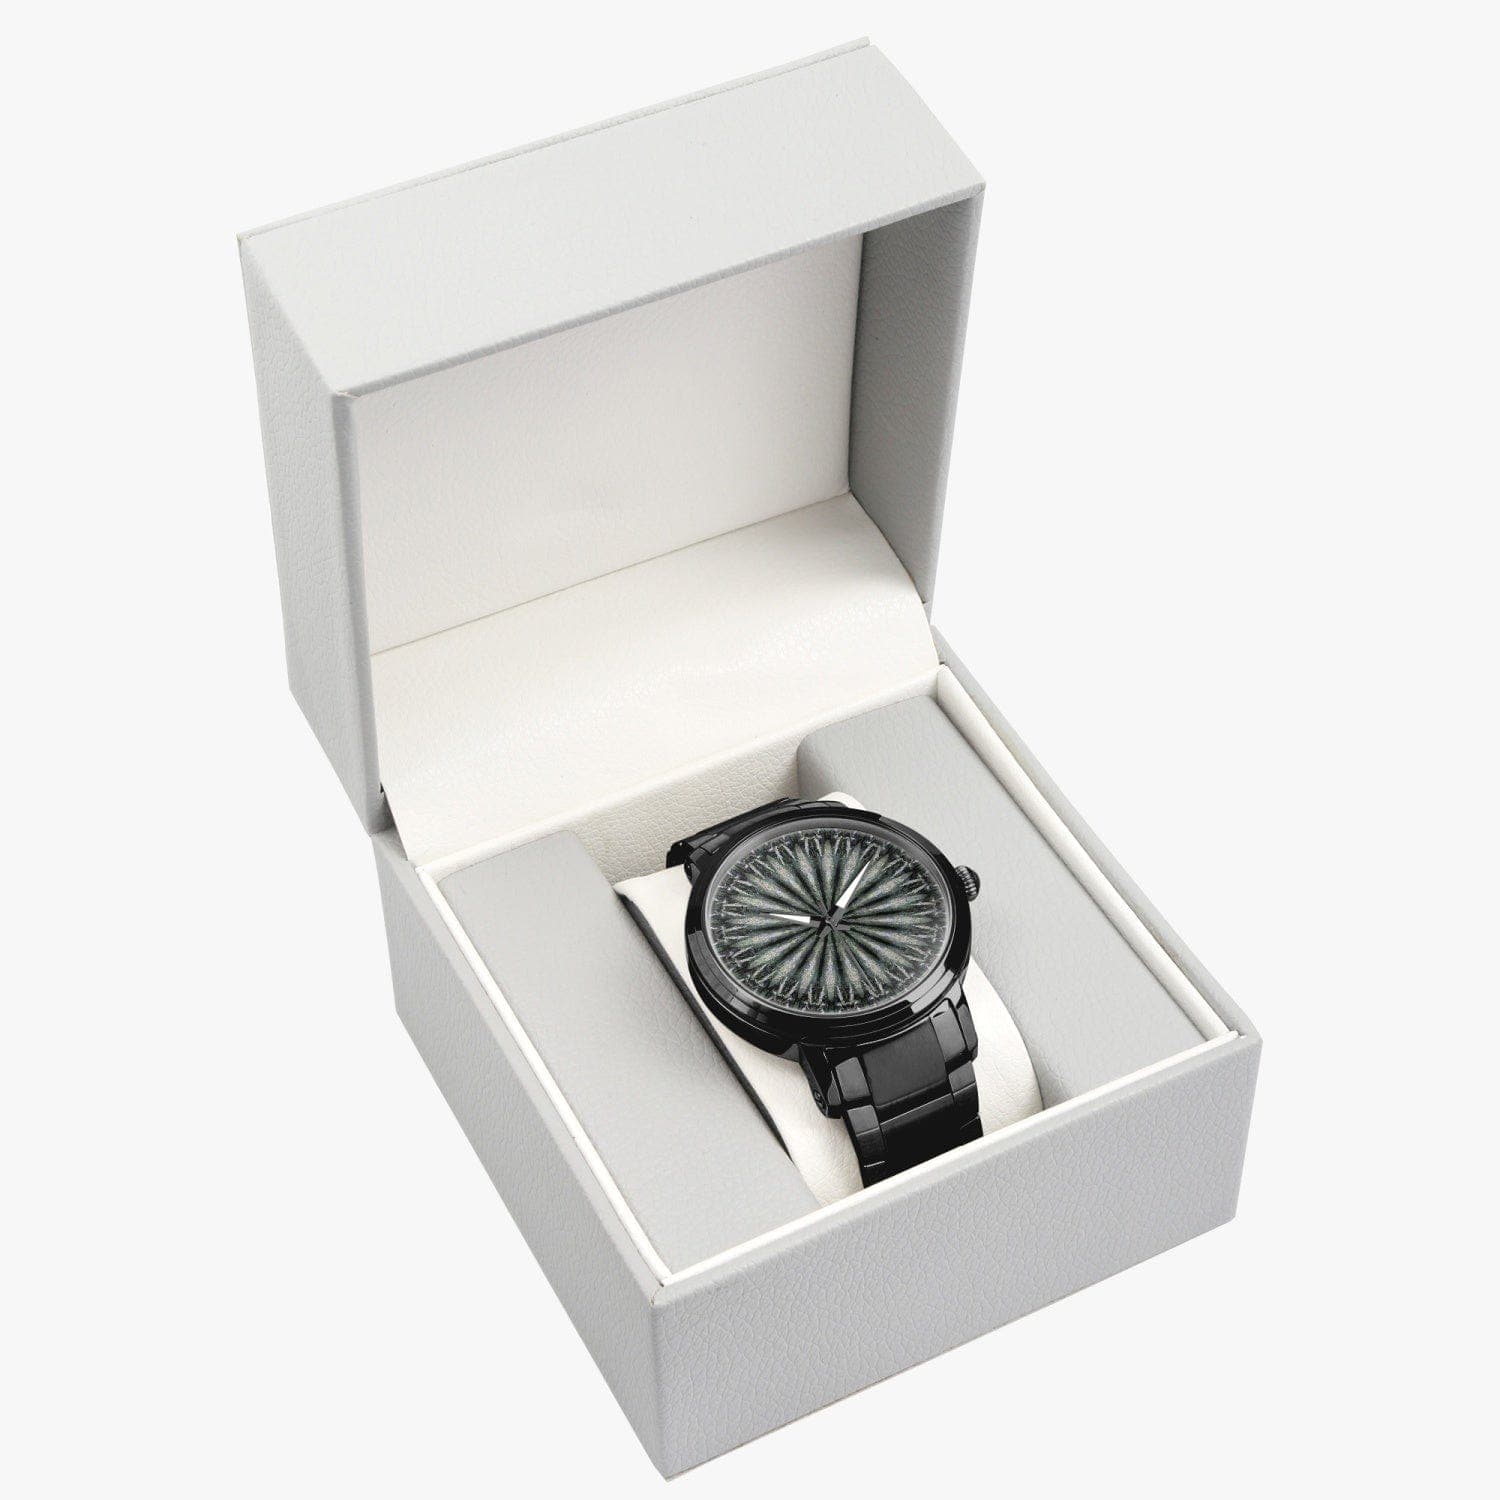 Ornamental Steel Strap Automatic Watch by Sensus Studio